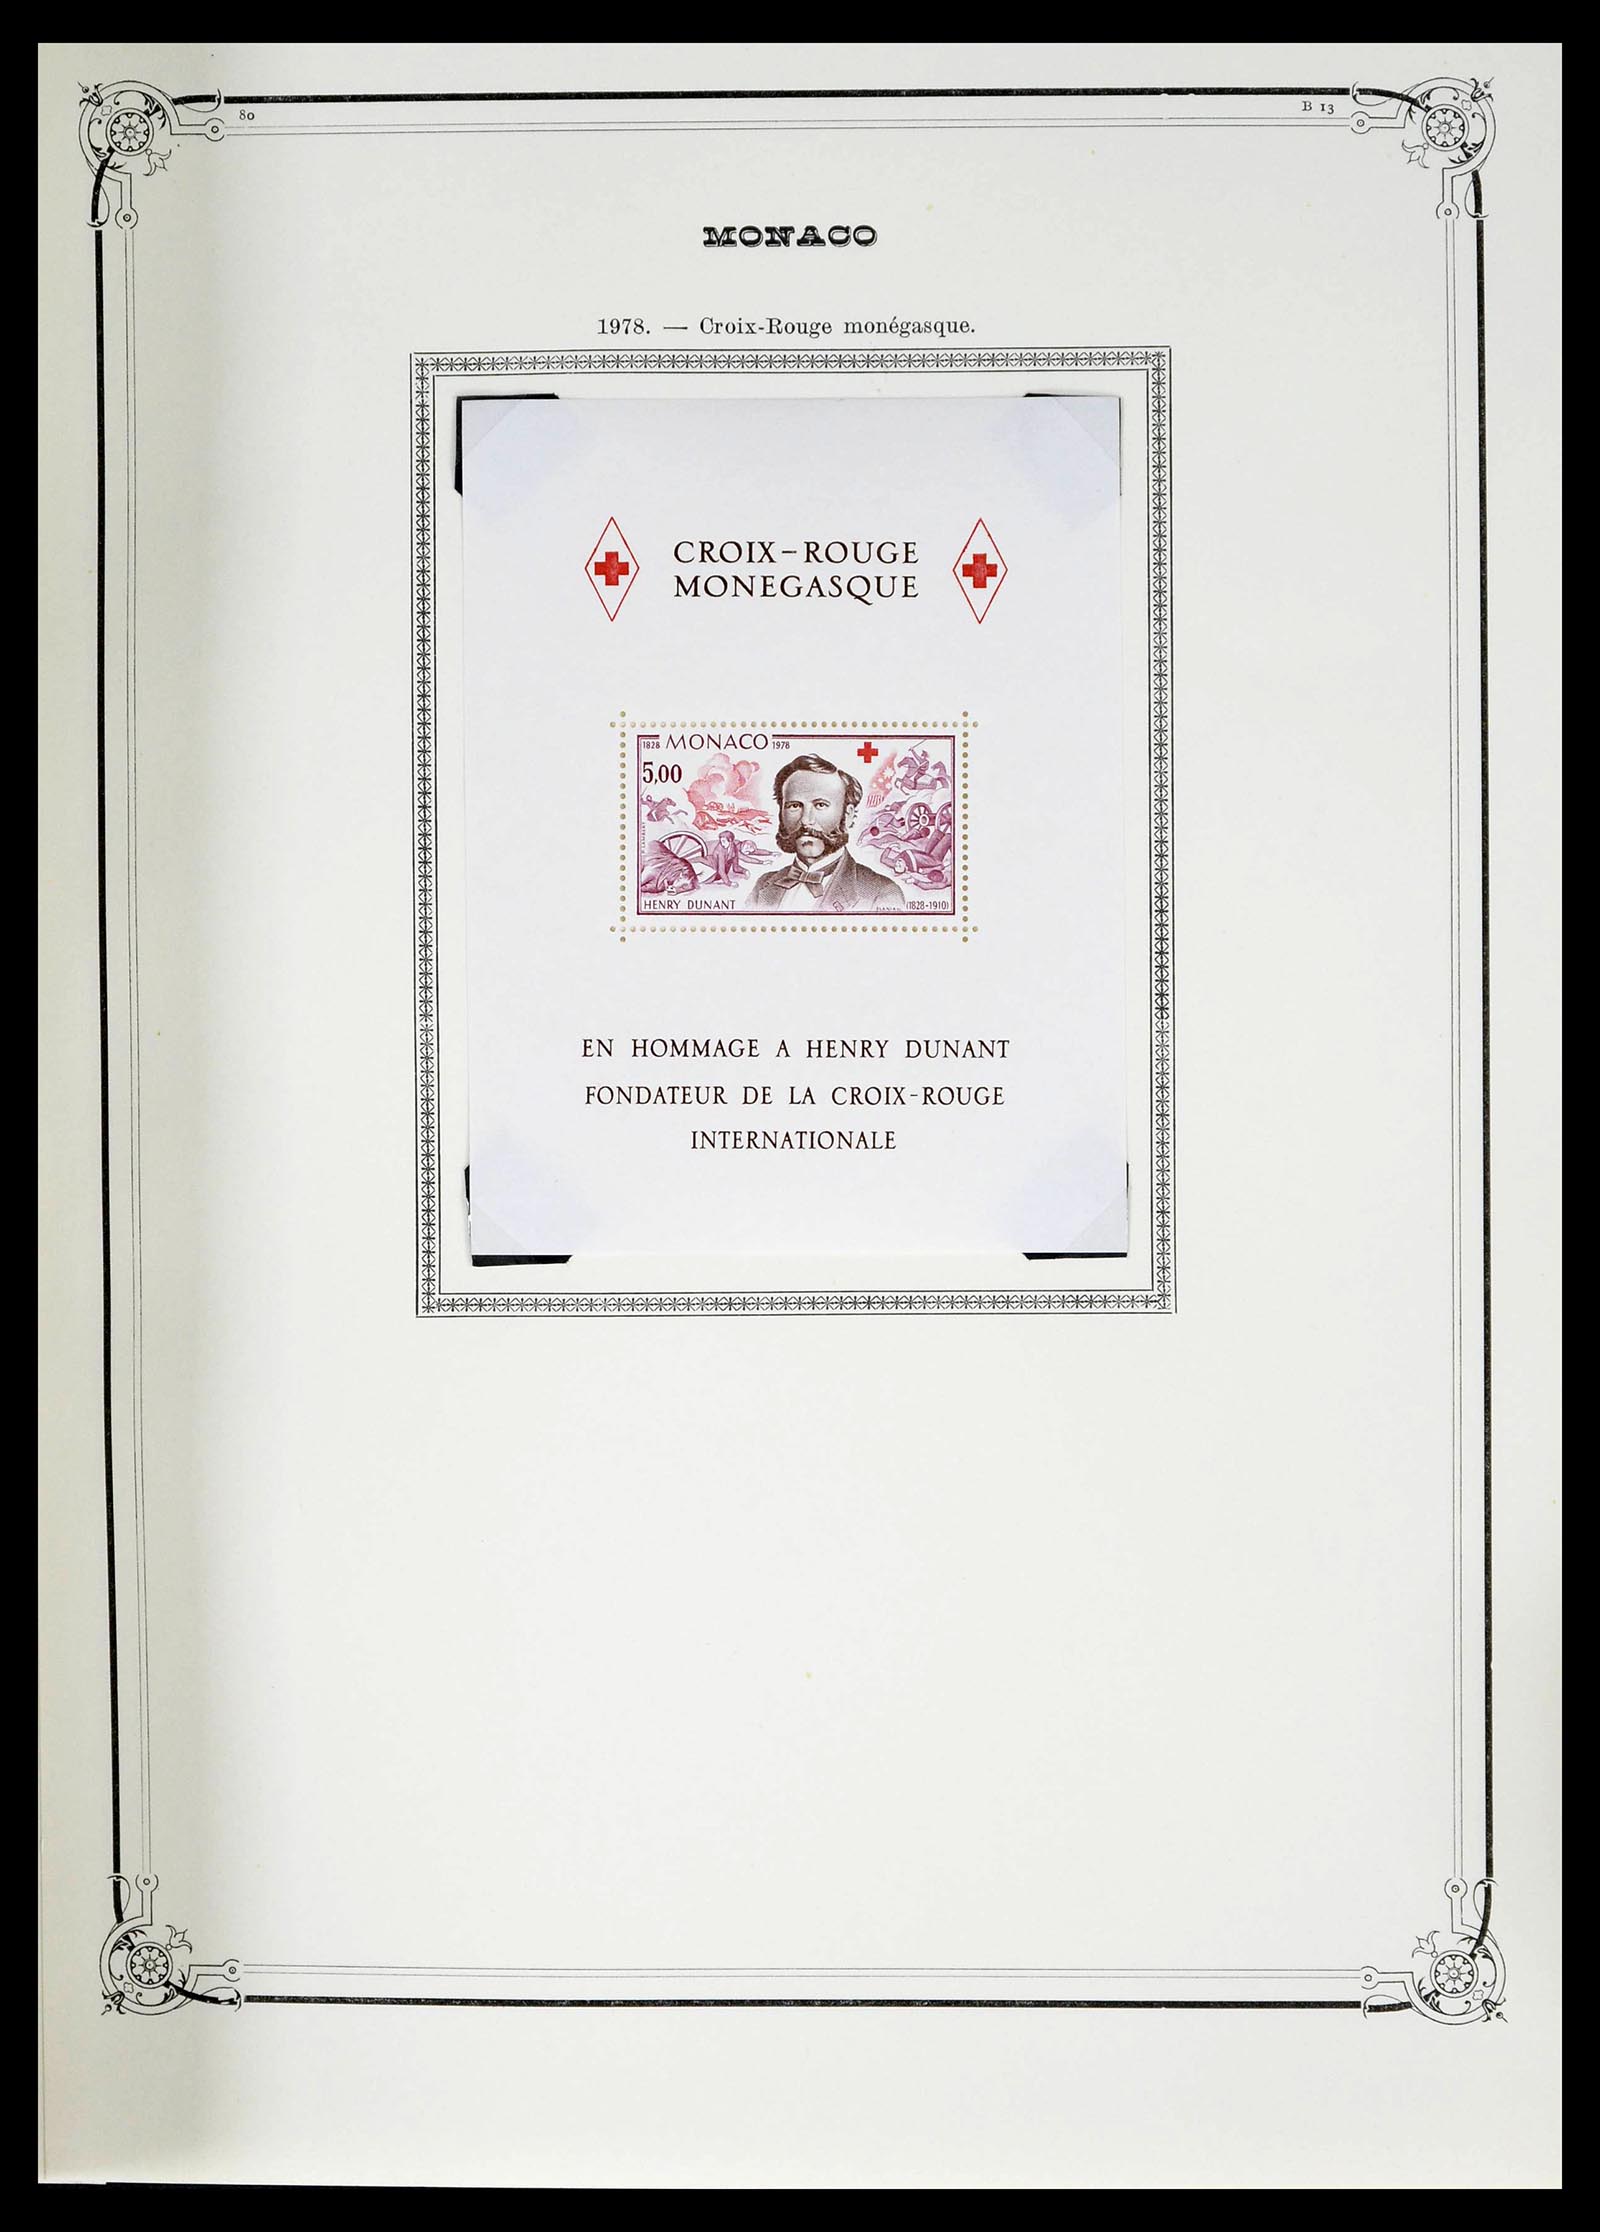 39133 0208 - Stamp collection 39133 Monaco 1885-1996.